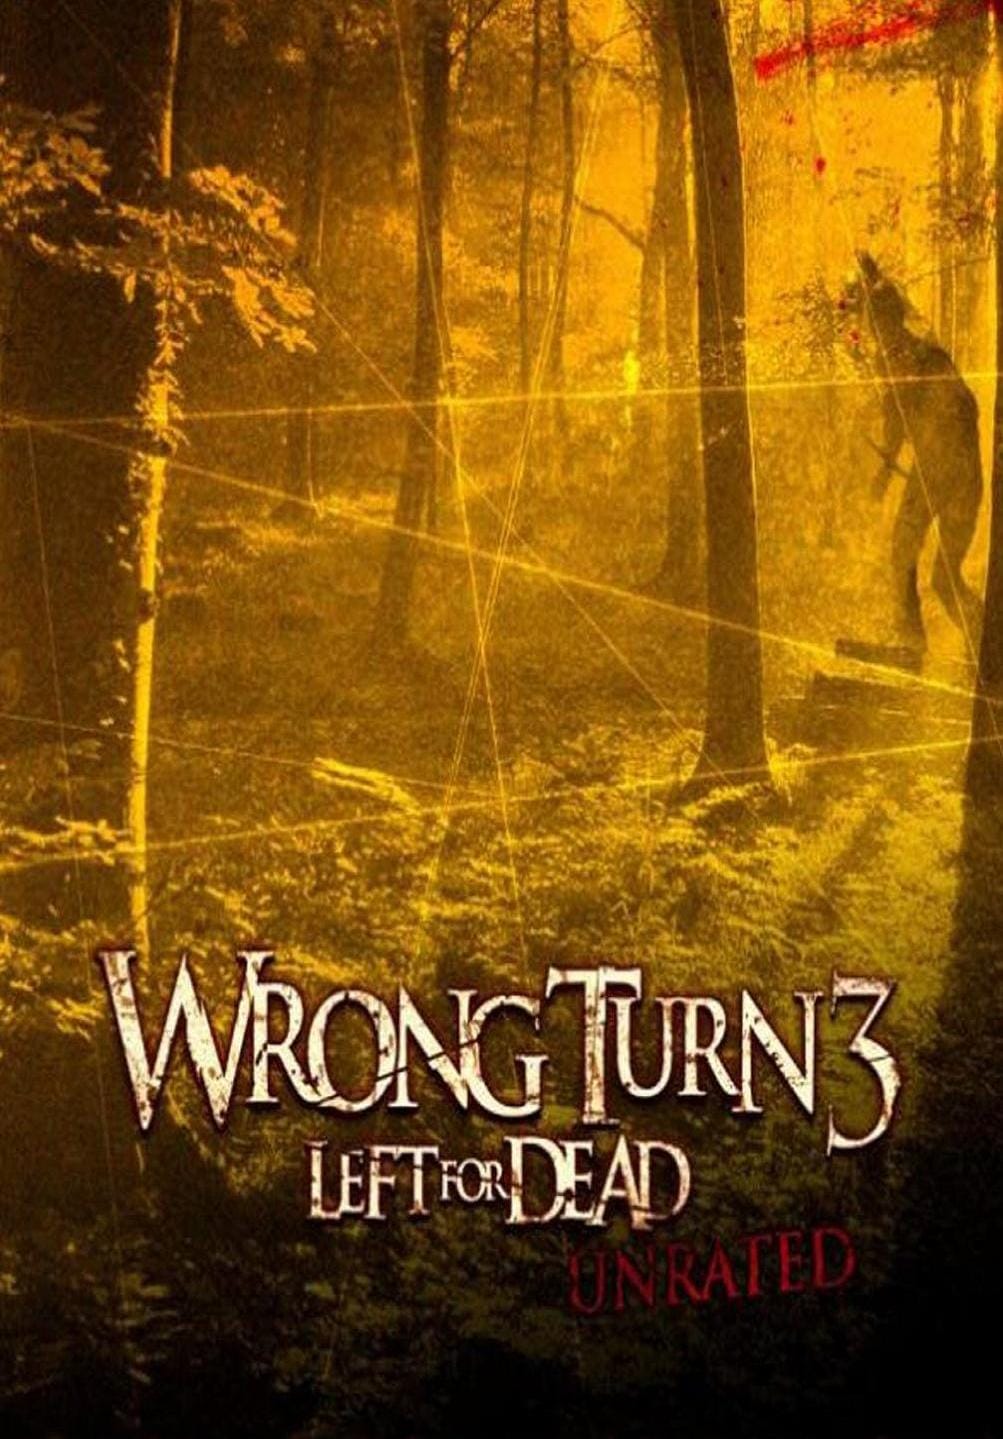 2009 Wrong Turn 3: Left For Dead